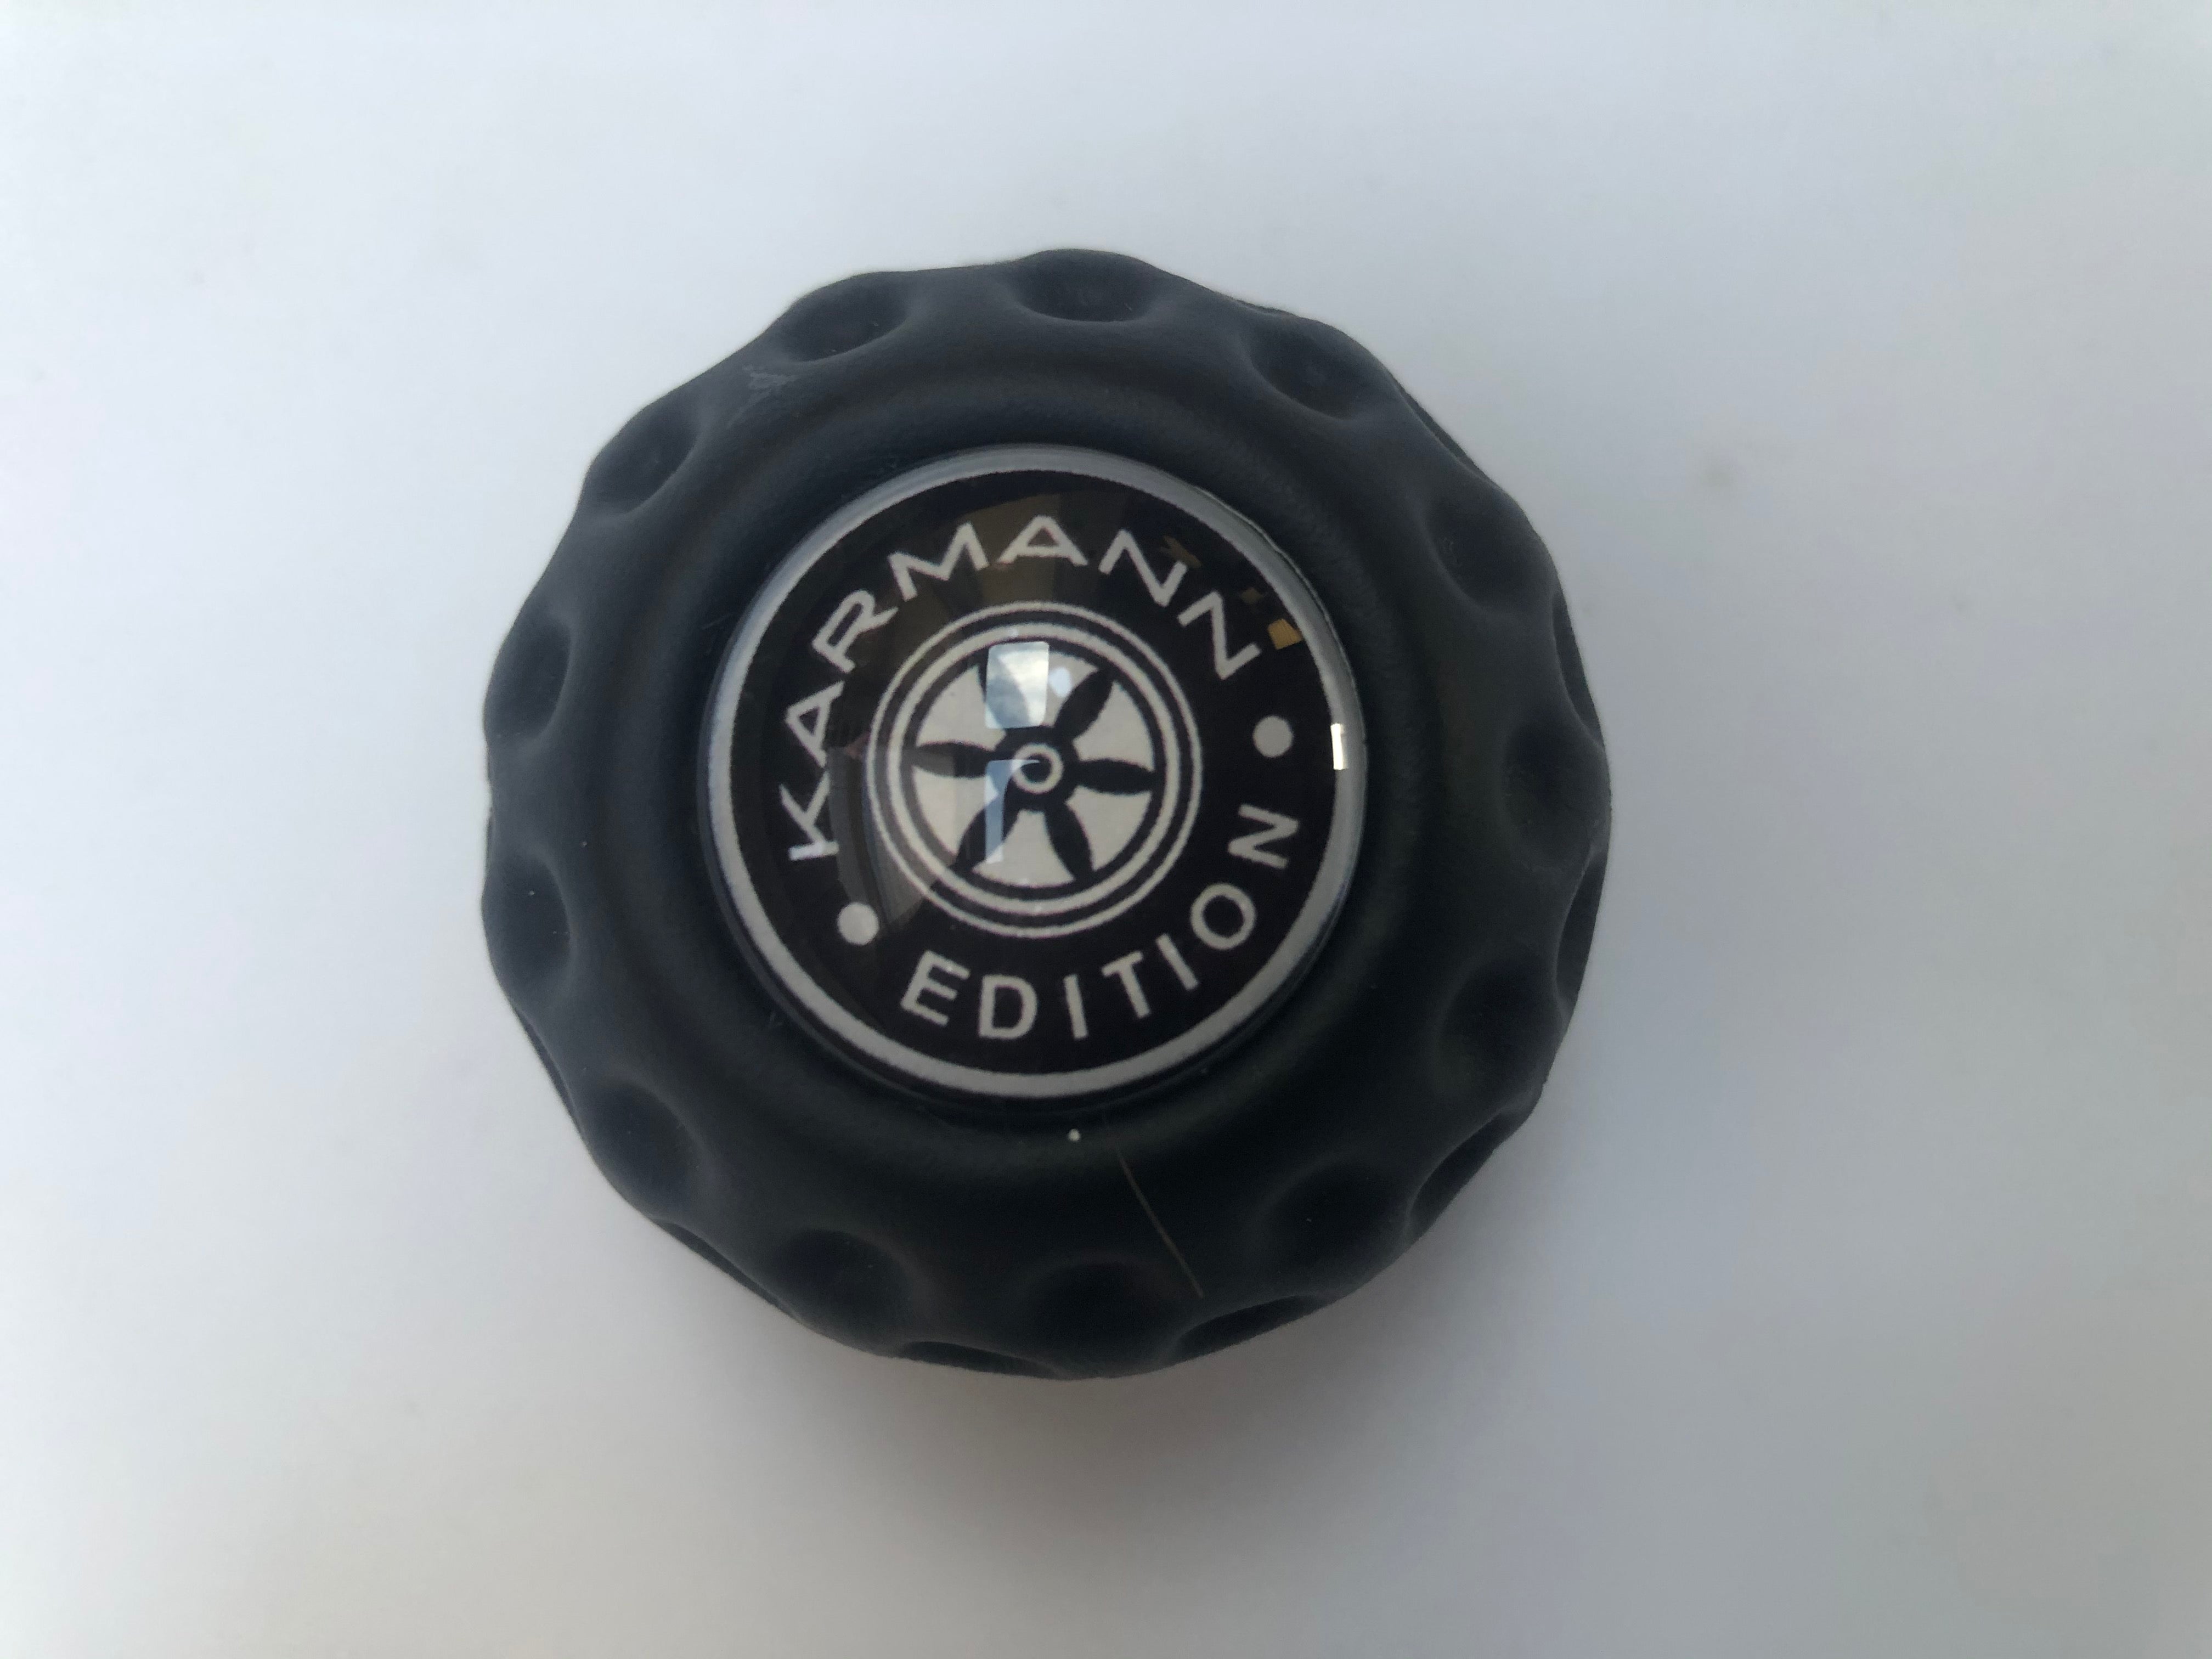 Karmann Edition Golf Ball Shift Knobs